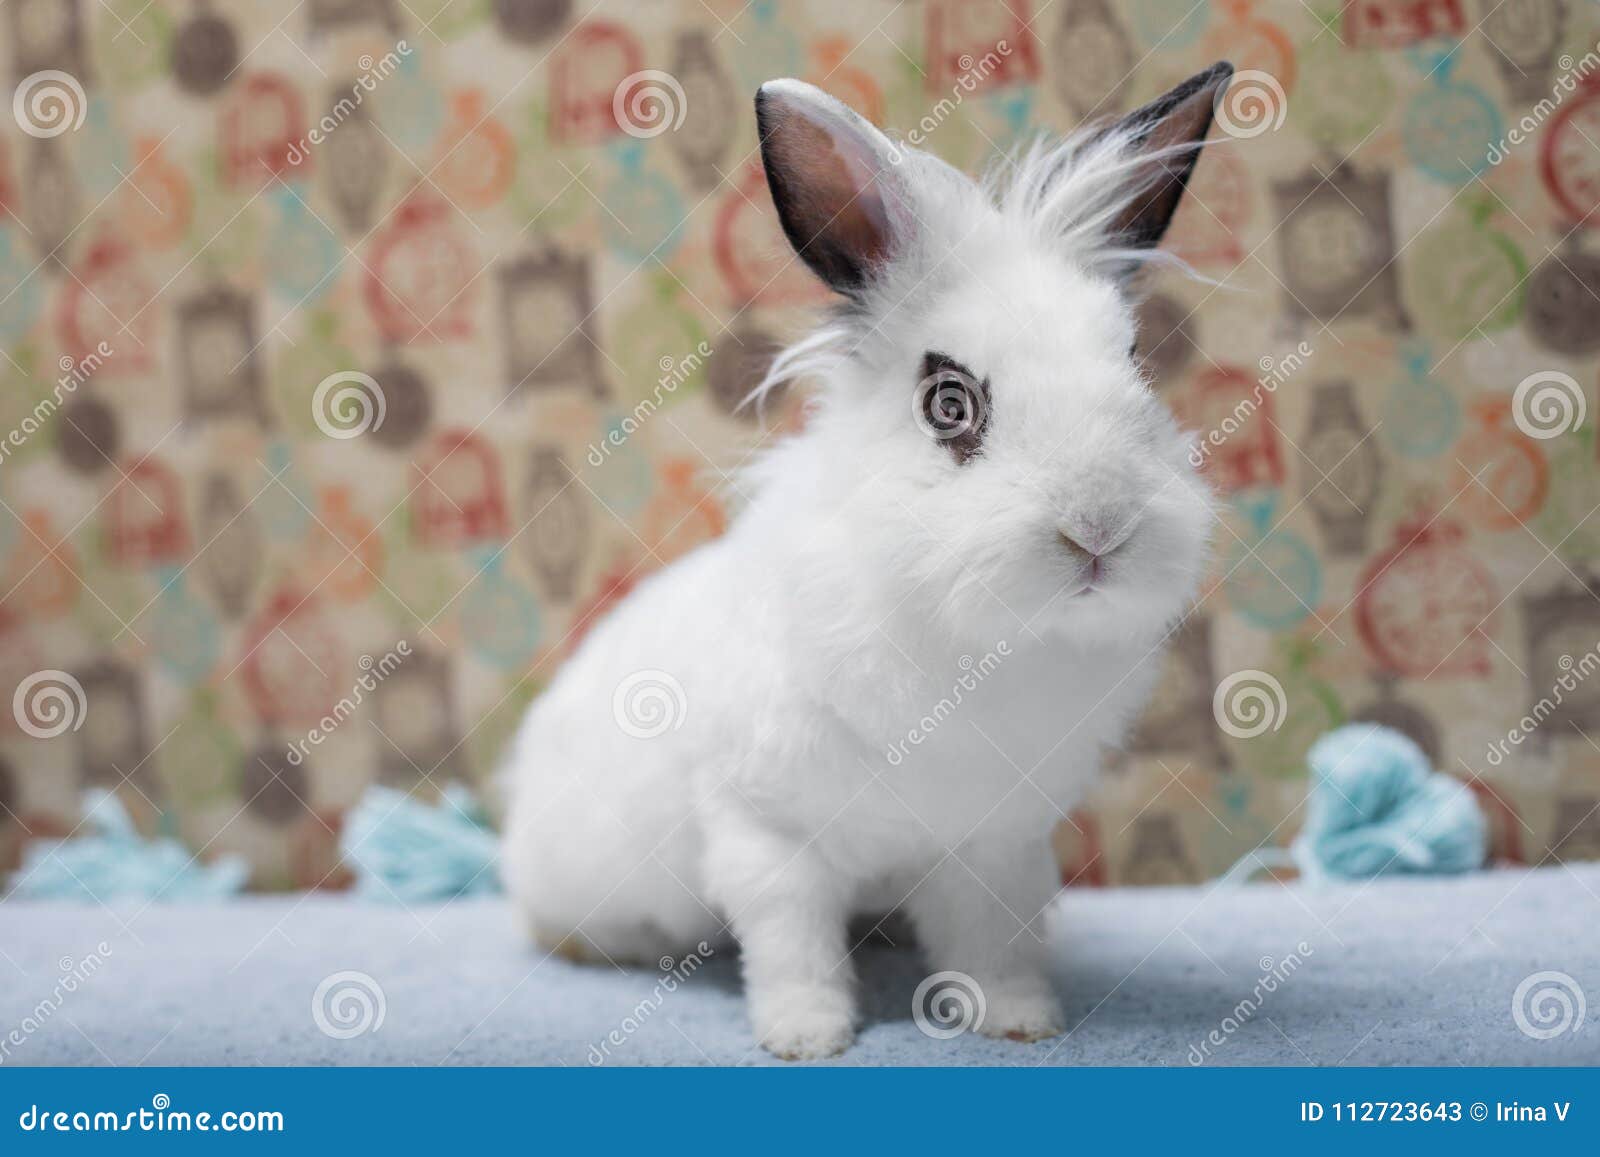 Cute White Baby Bunny Rabbit Lionhead Stock Image Image Of Rabbit Cute 112723643